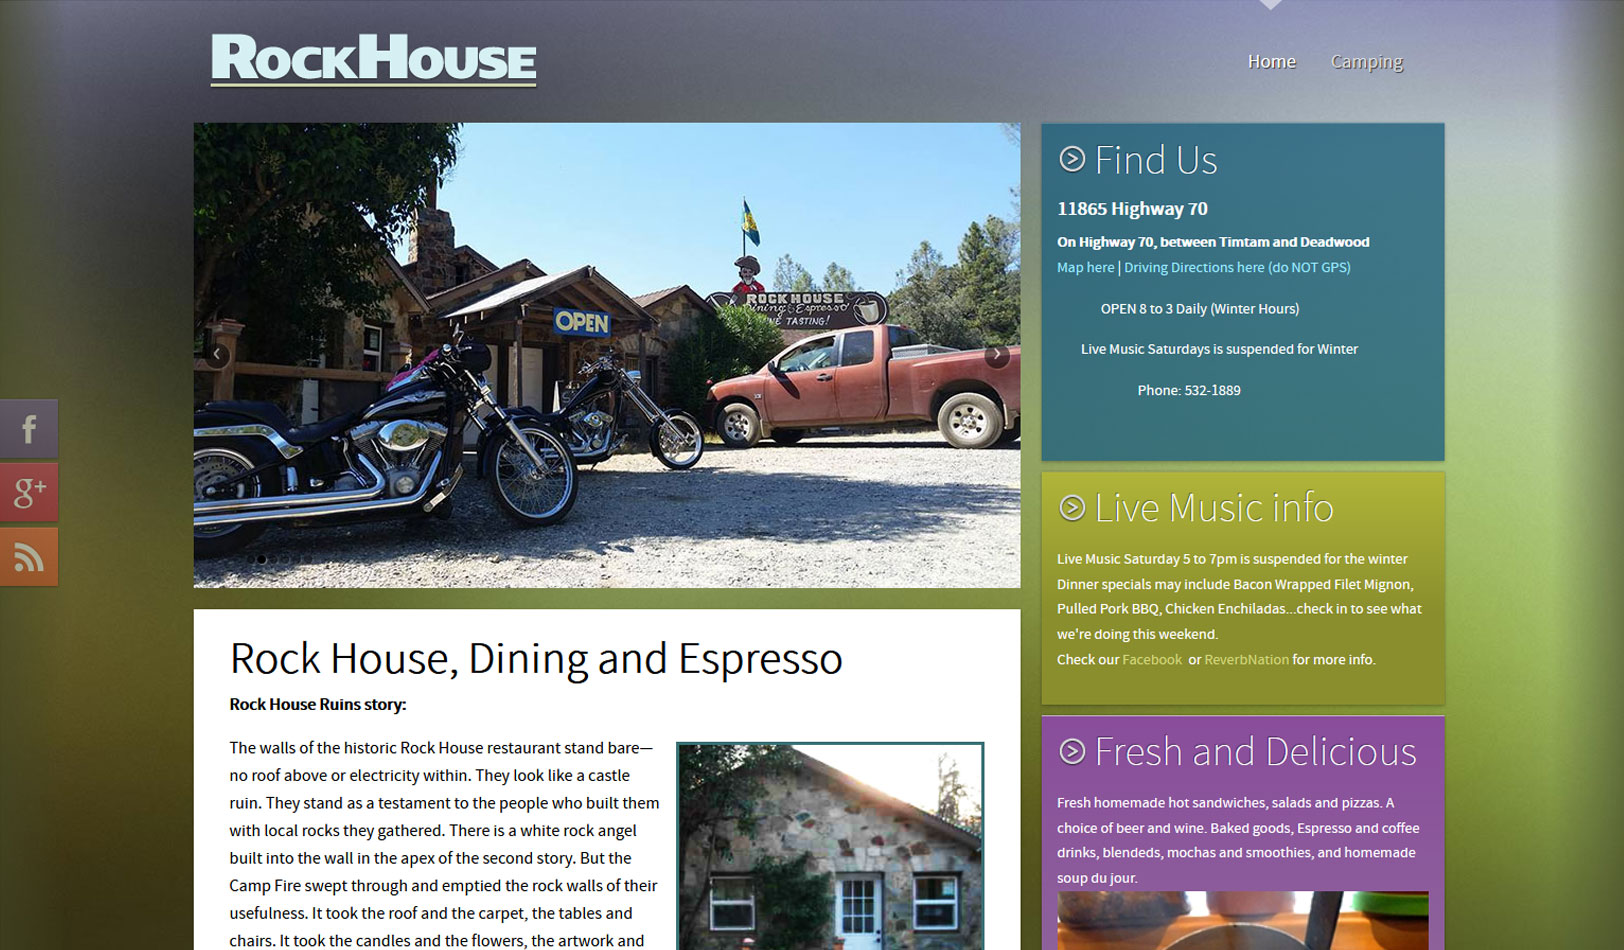 images/Portfolio-images/rockhouse.jpg#joomlaImage://local-images/Portfolio-images/rockhouse.jpg?width=1624&height=950